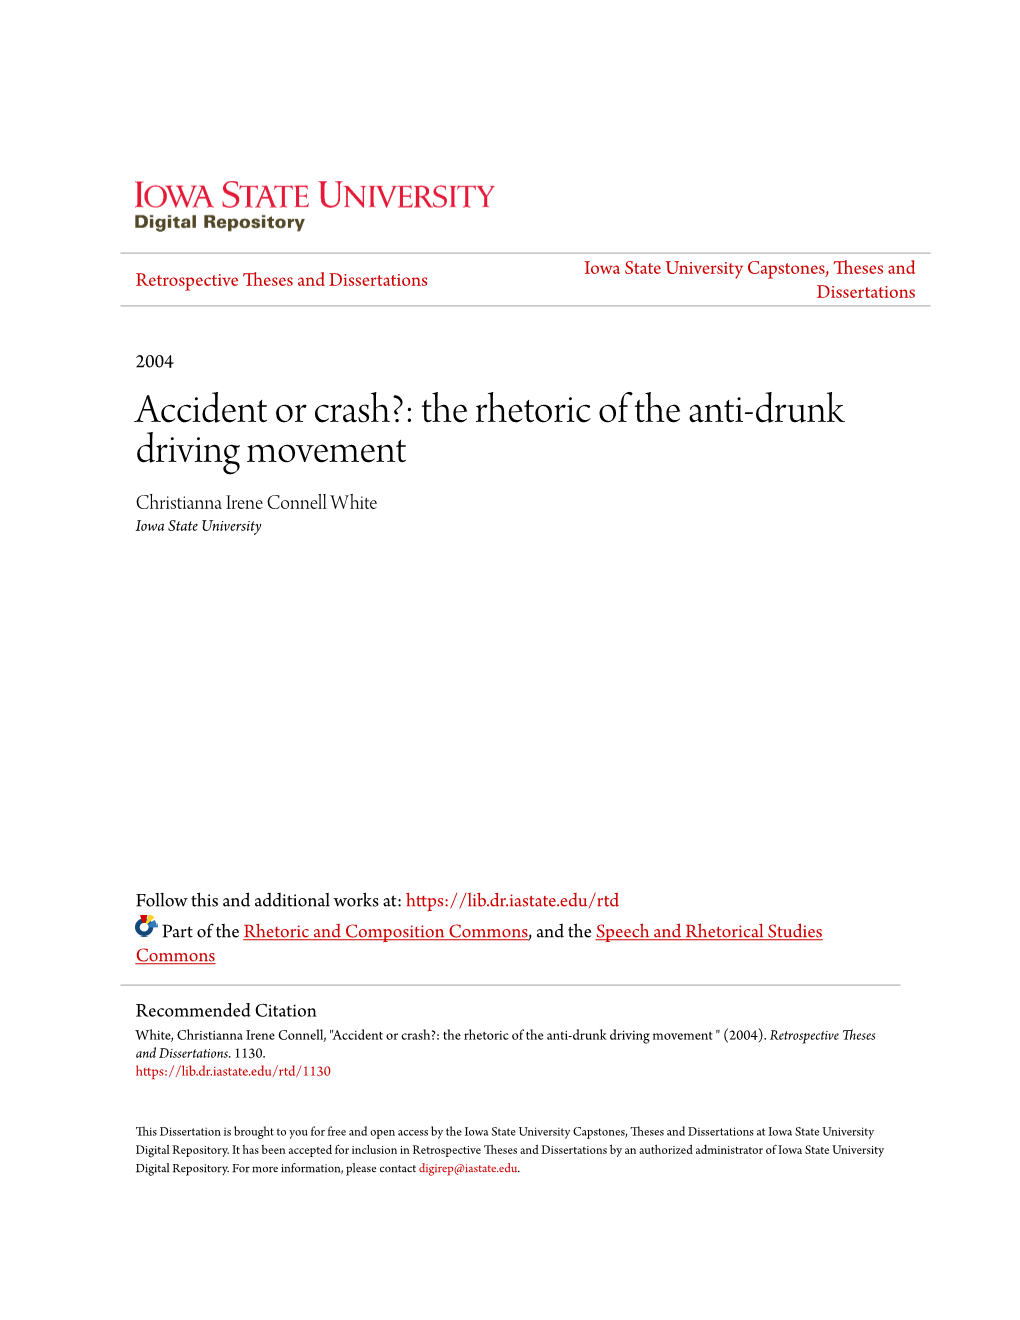 Accident Or Crash?: the Rhetoric of the Anti-Drunk Driving Movement Christianna Irene Connell White Iowa State University